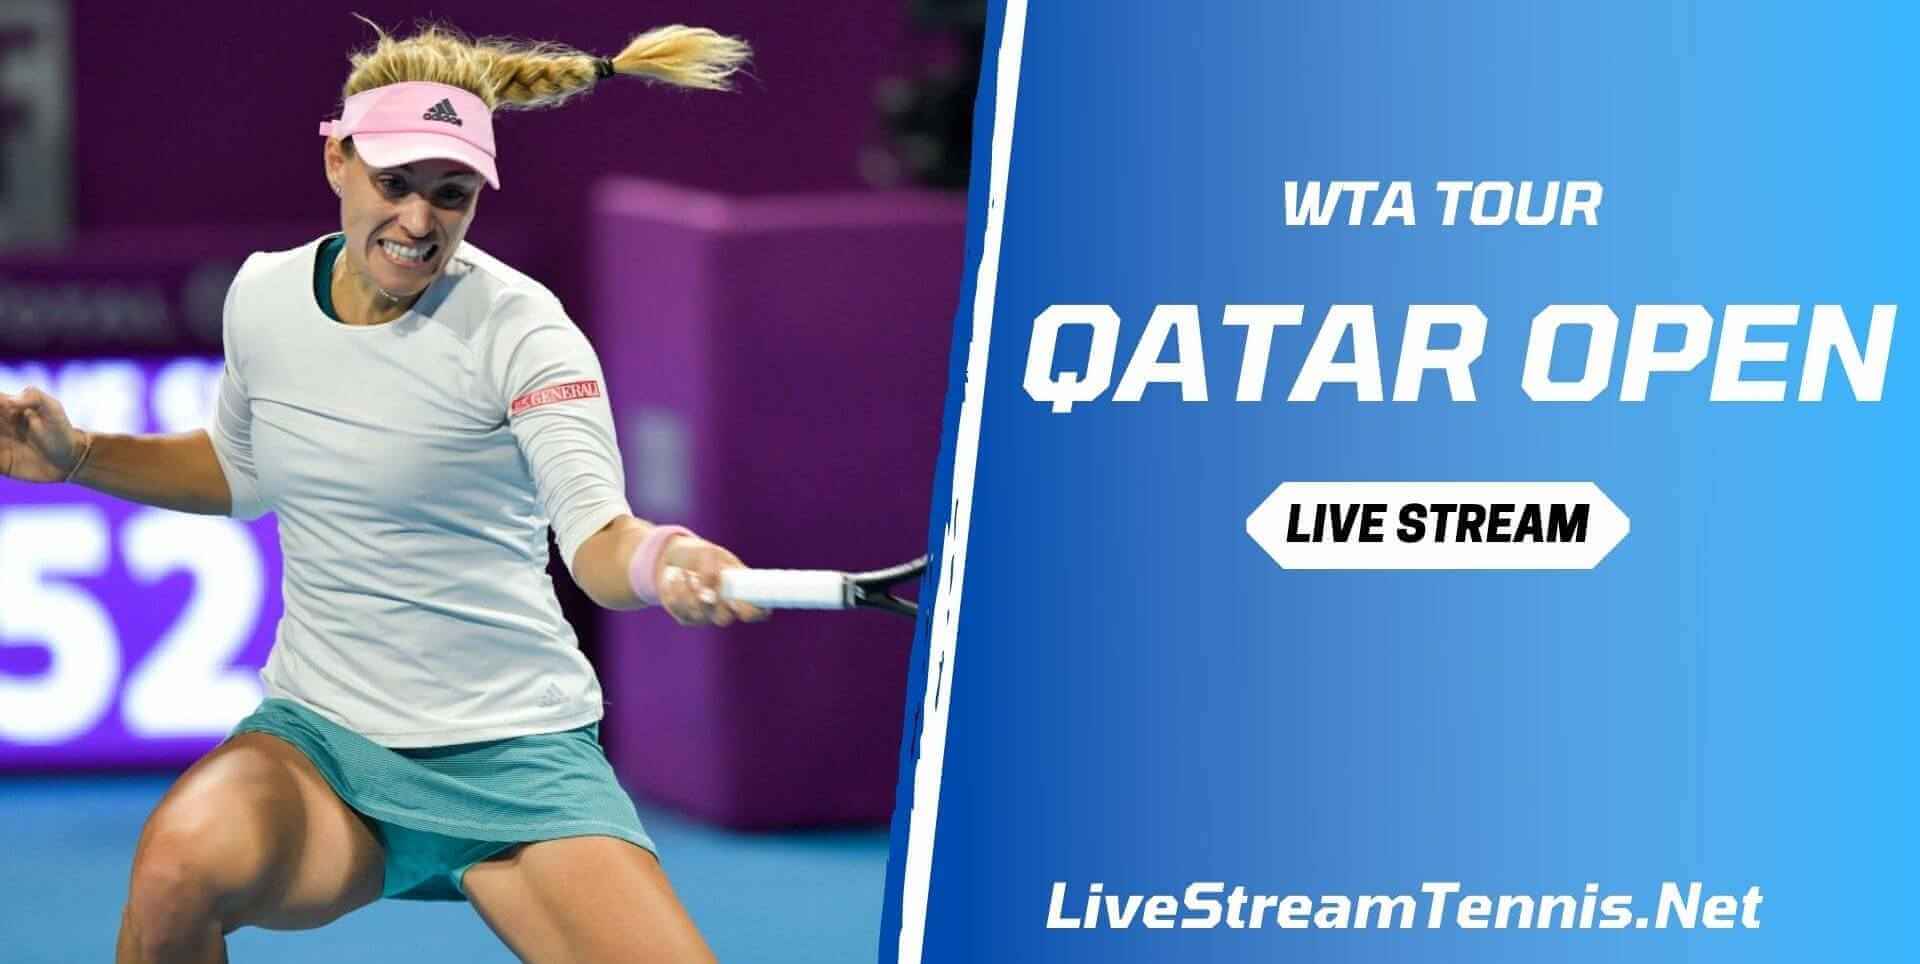 Qatar Open Tennis Live Stream WTA Tour